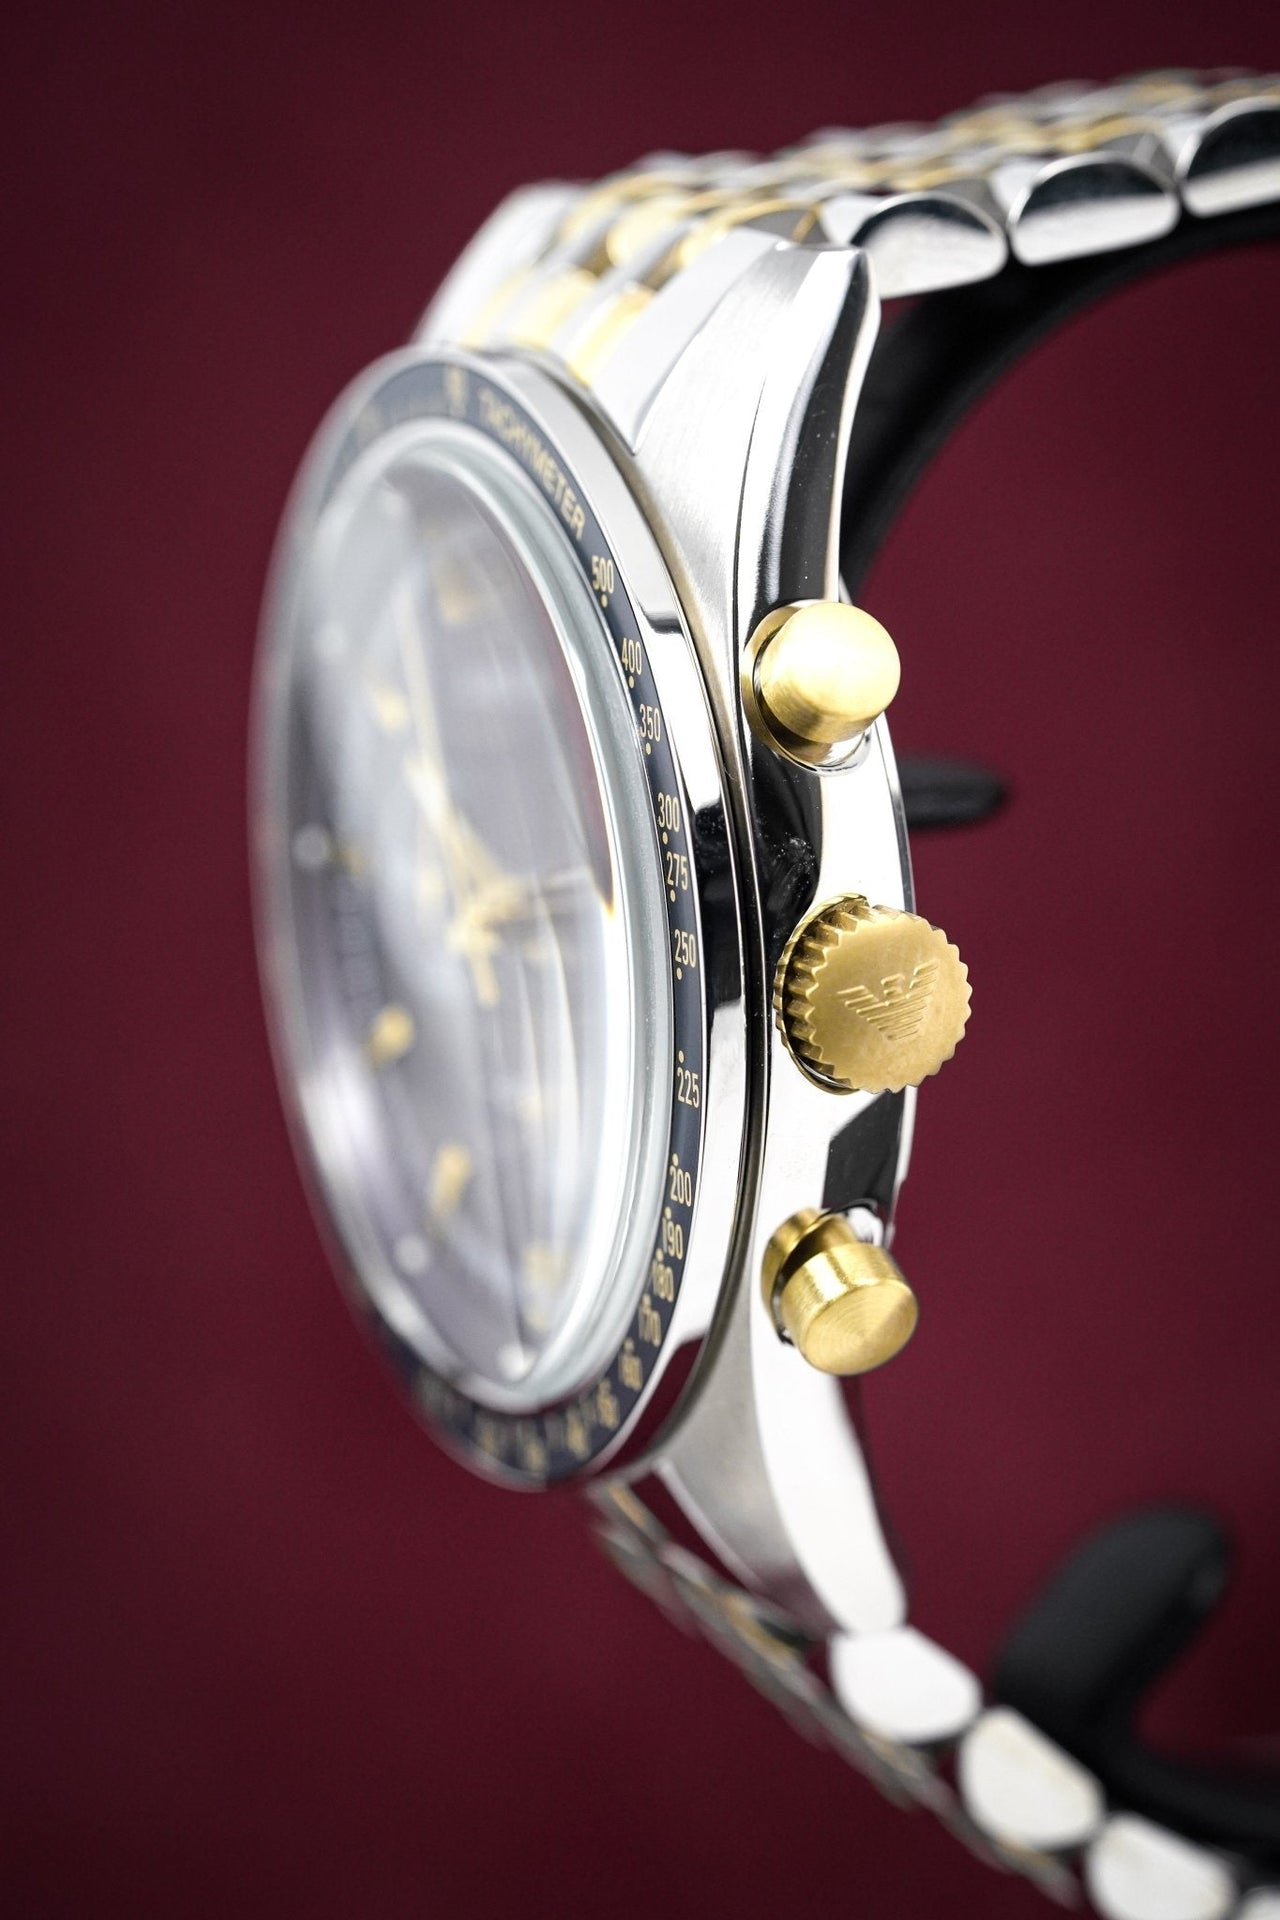 Emporio Armani Men's Tazio Chronograph Watch Two Tone AR8030 - Watches & Crystals